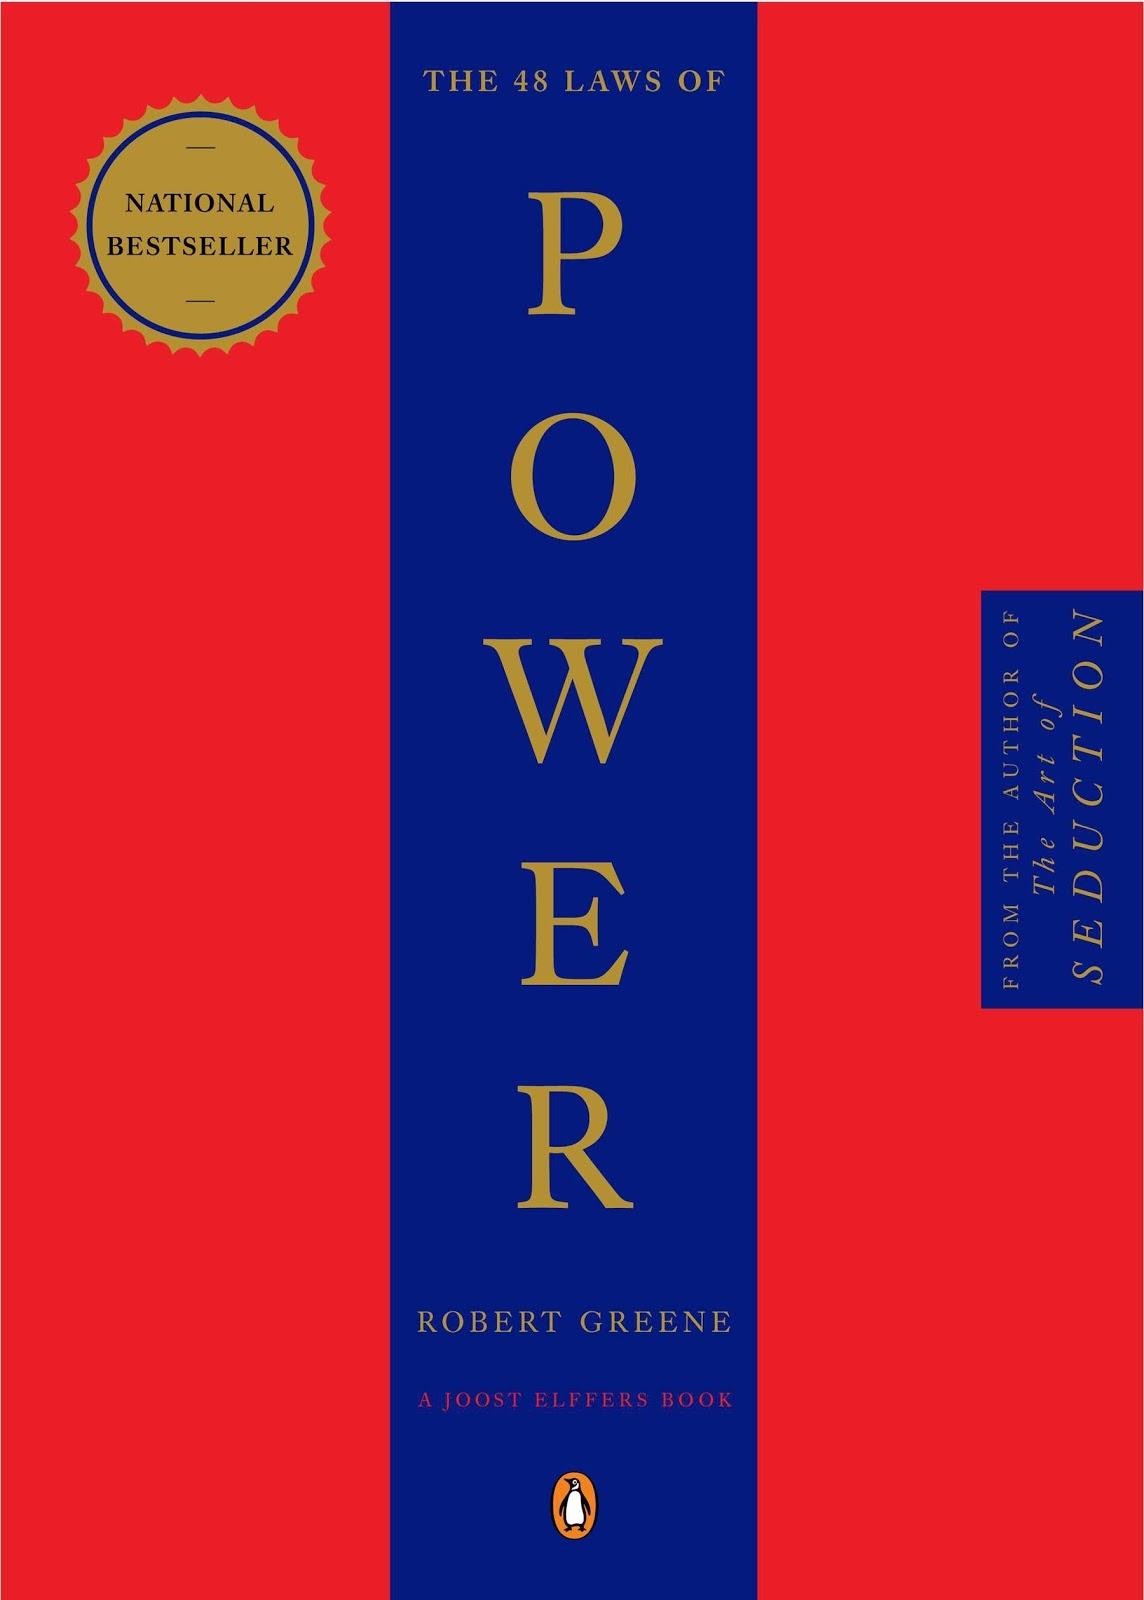 Book 'The 48 Laws of Power' - Robert Greene